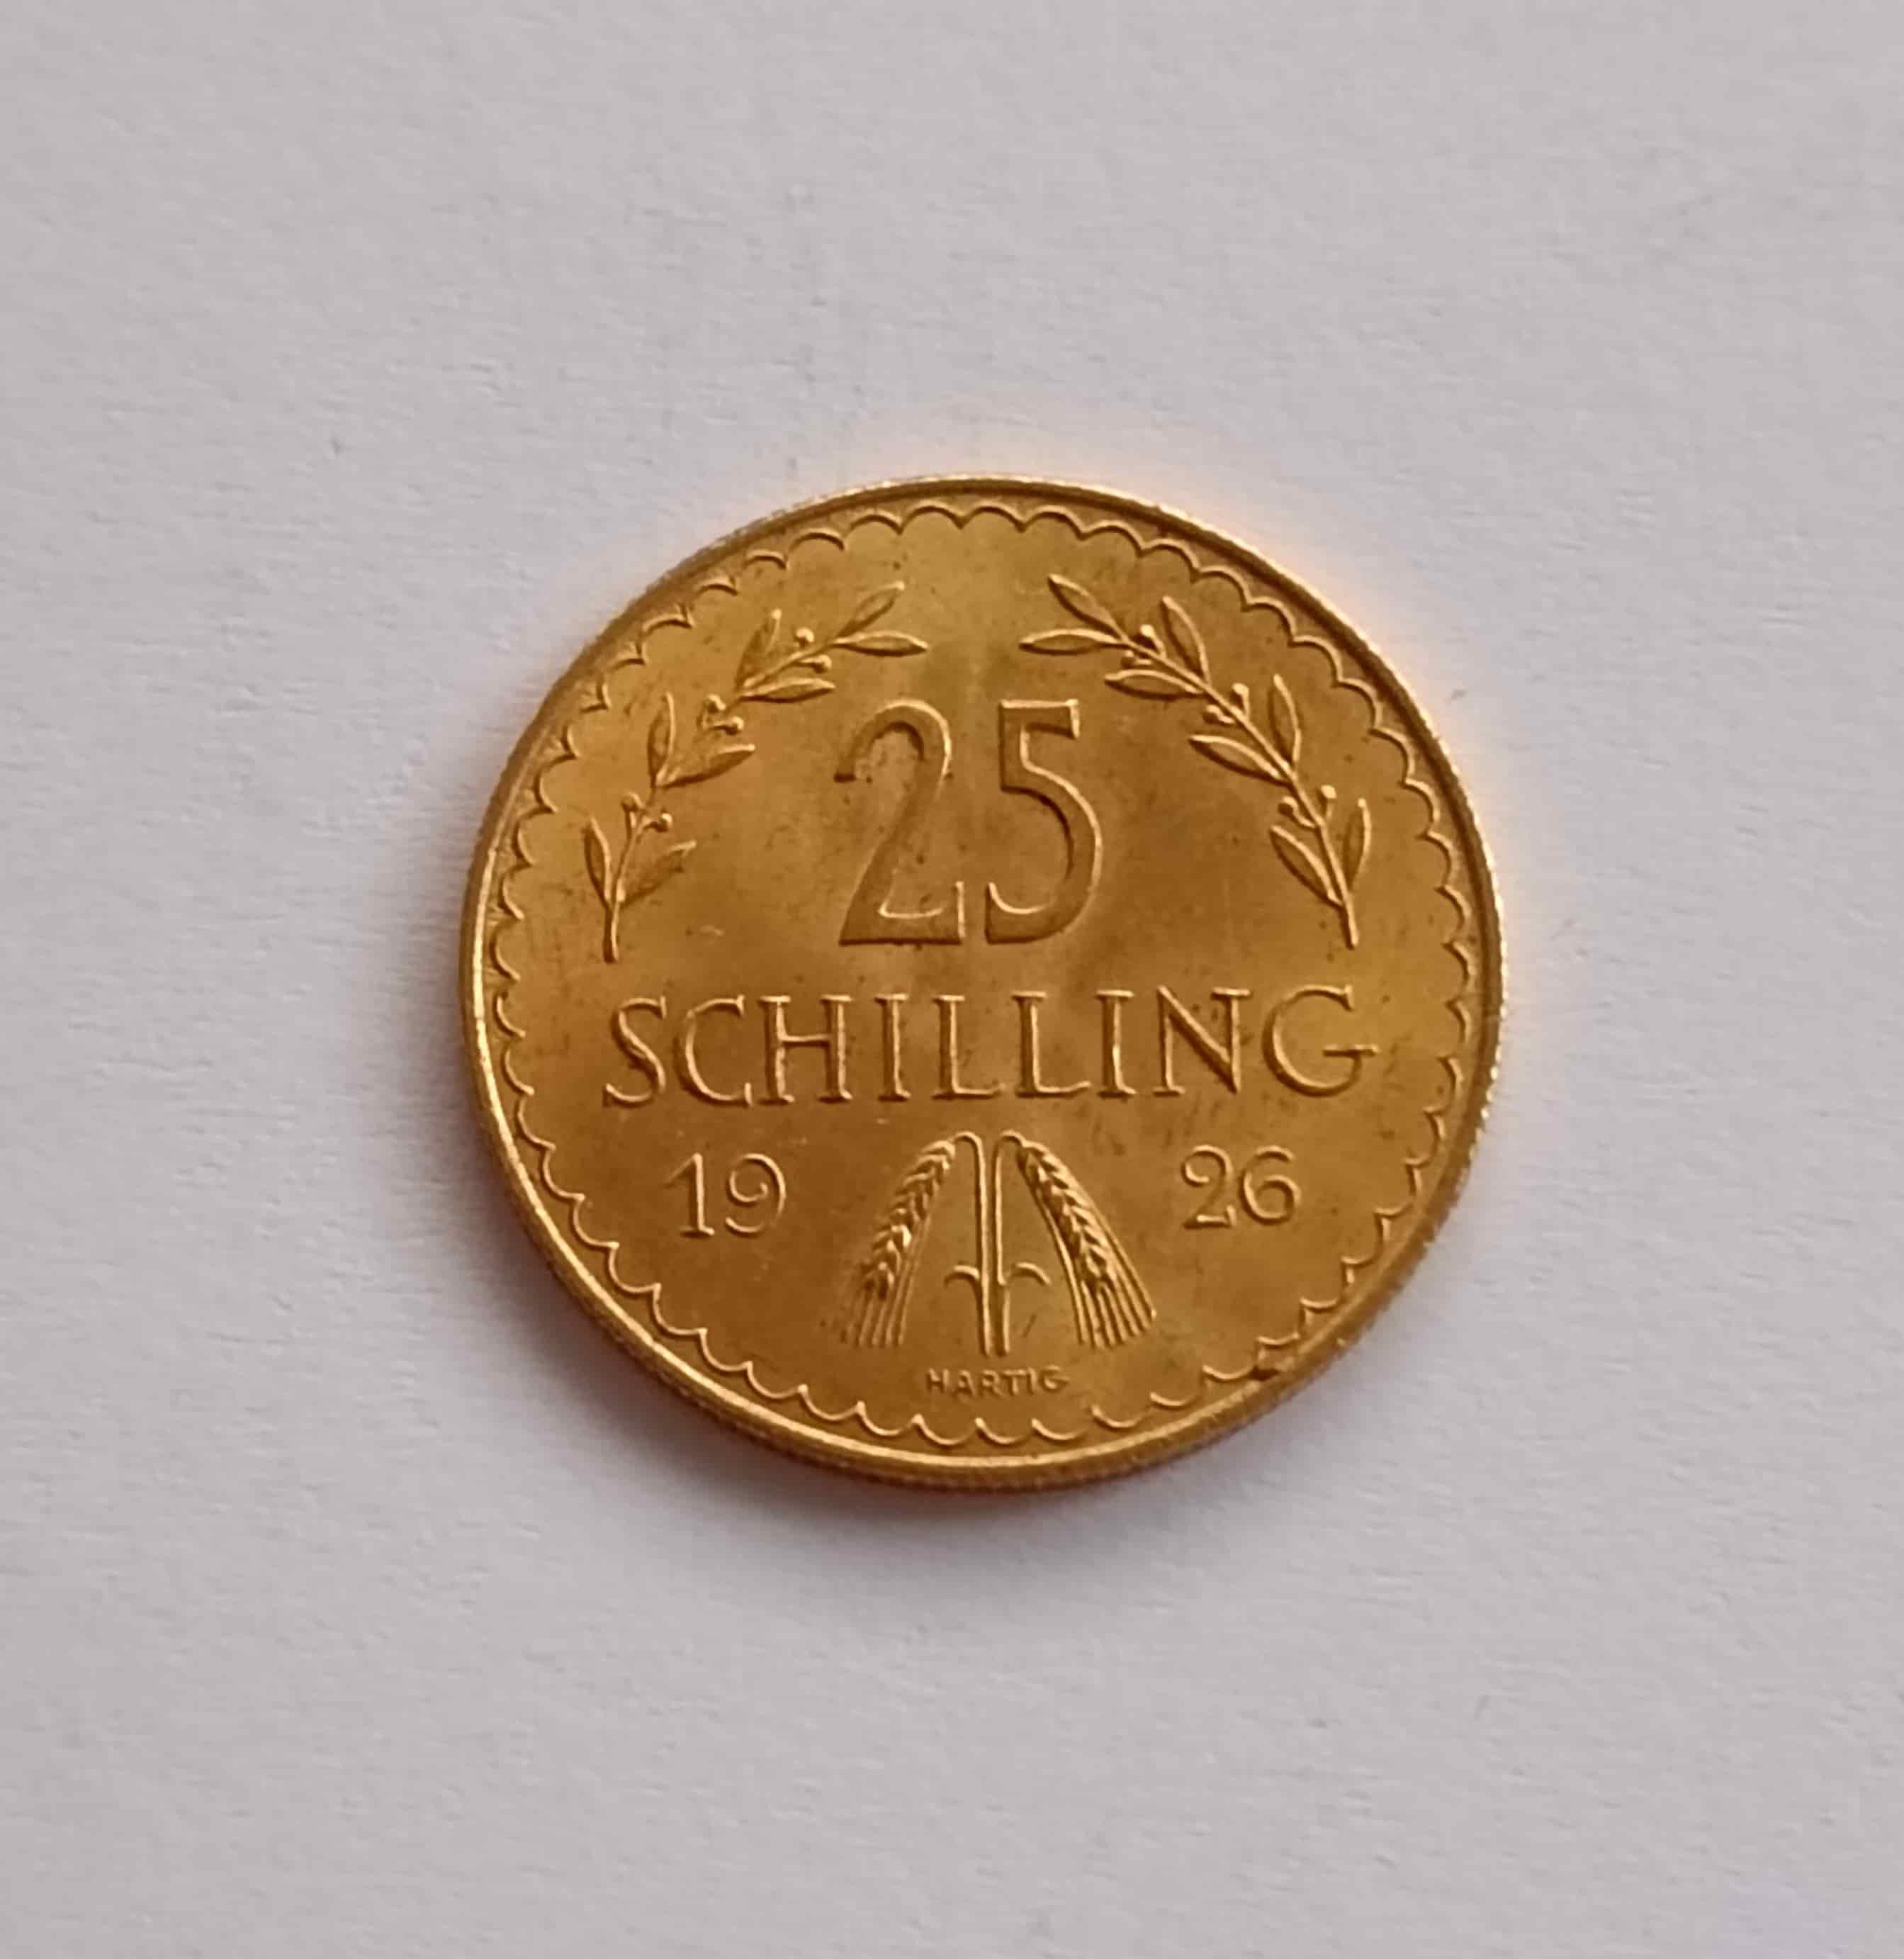 25 schilling  1926